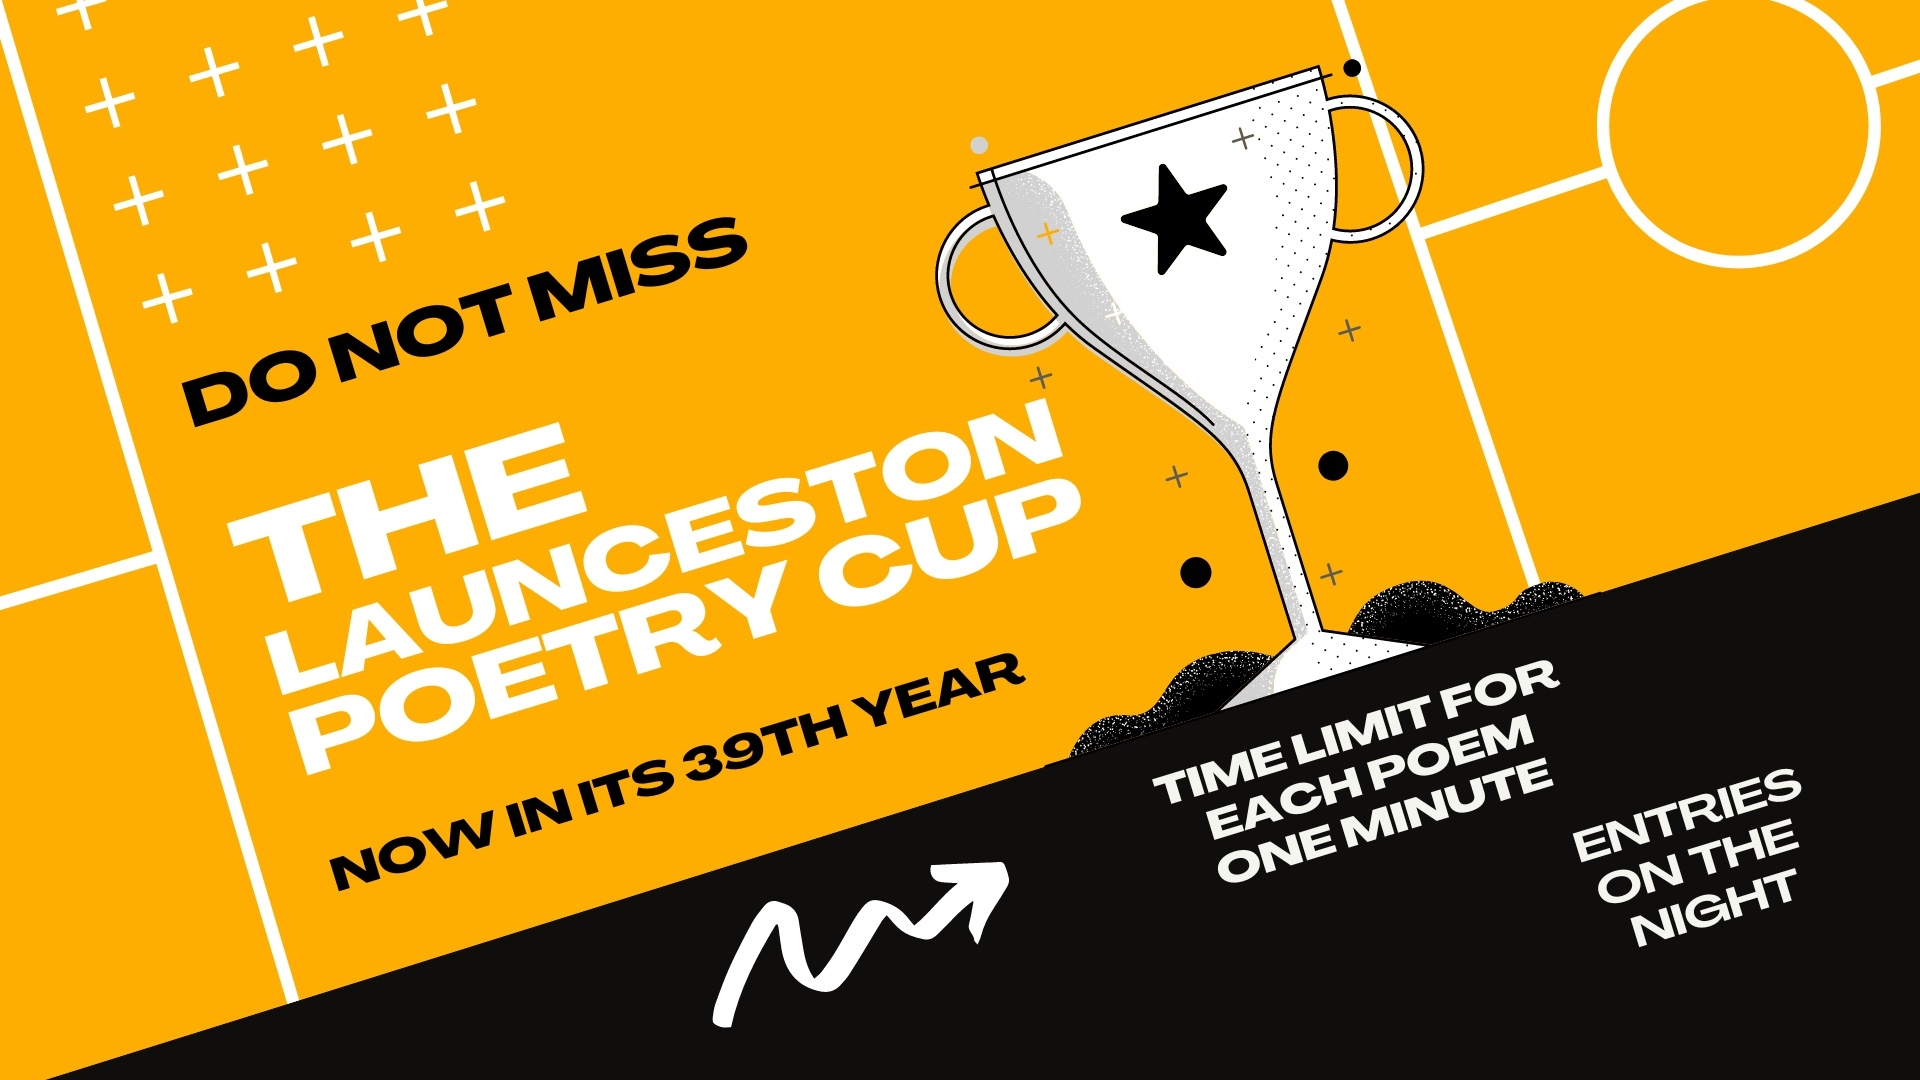 The Launceston Poetry Cup